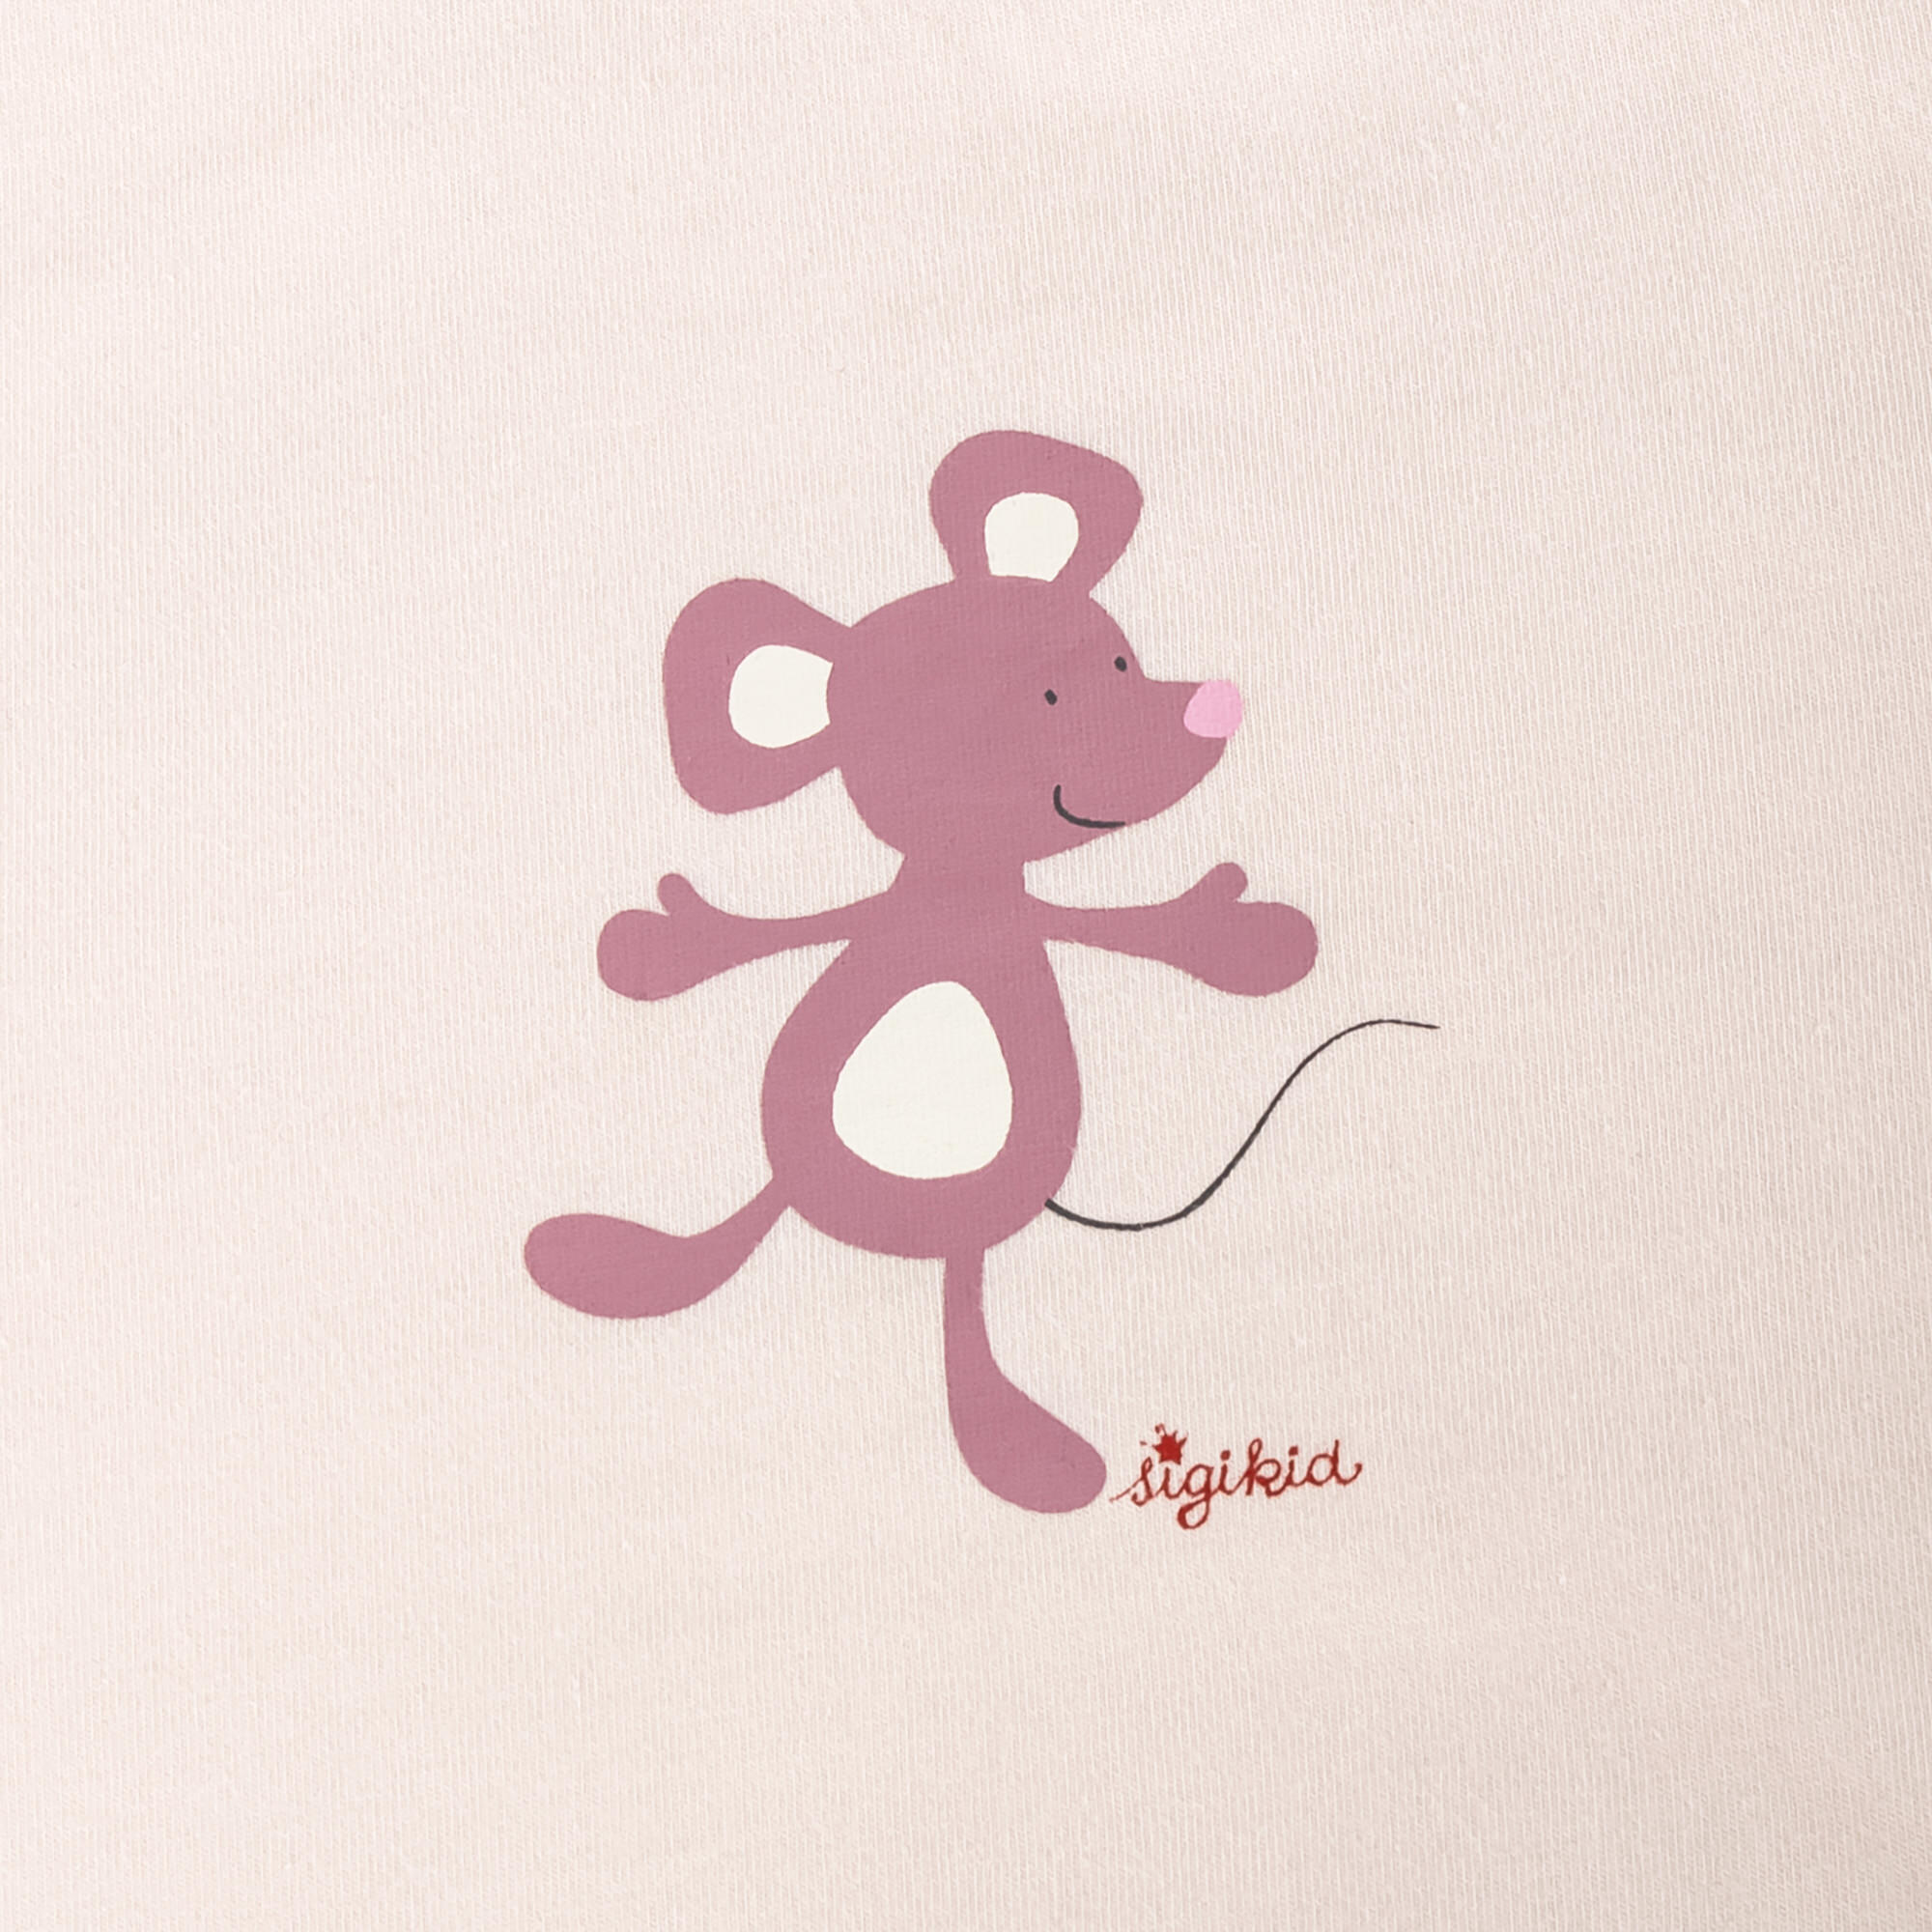 Children's shorty pyjamas mouse, pink